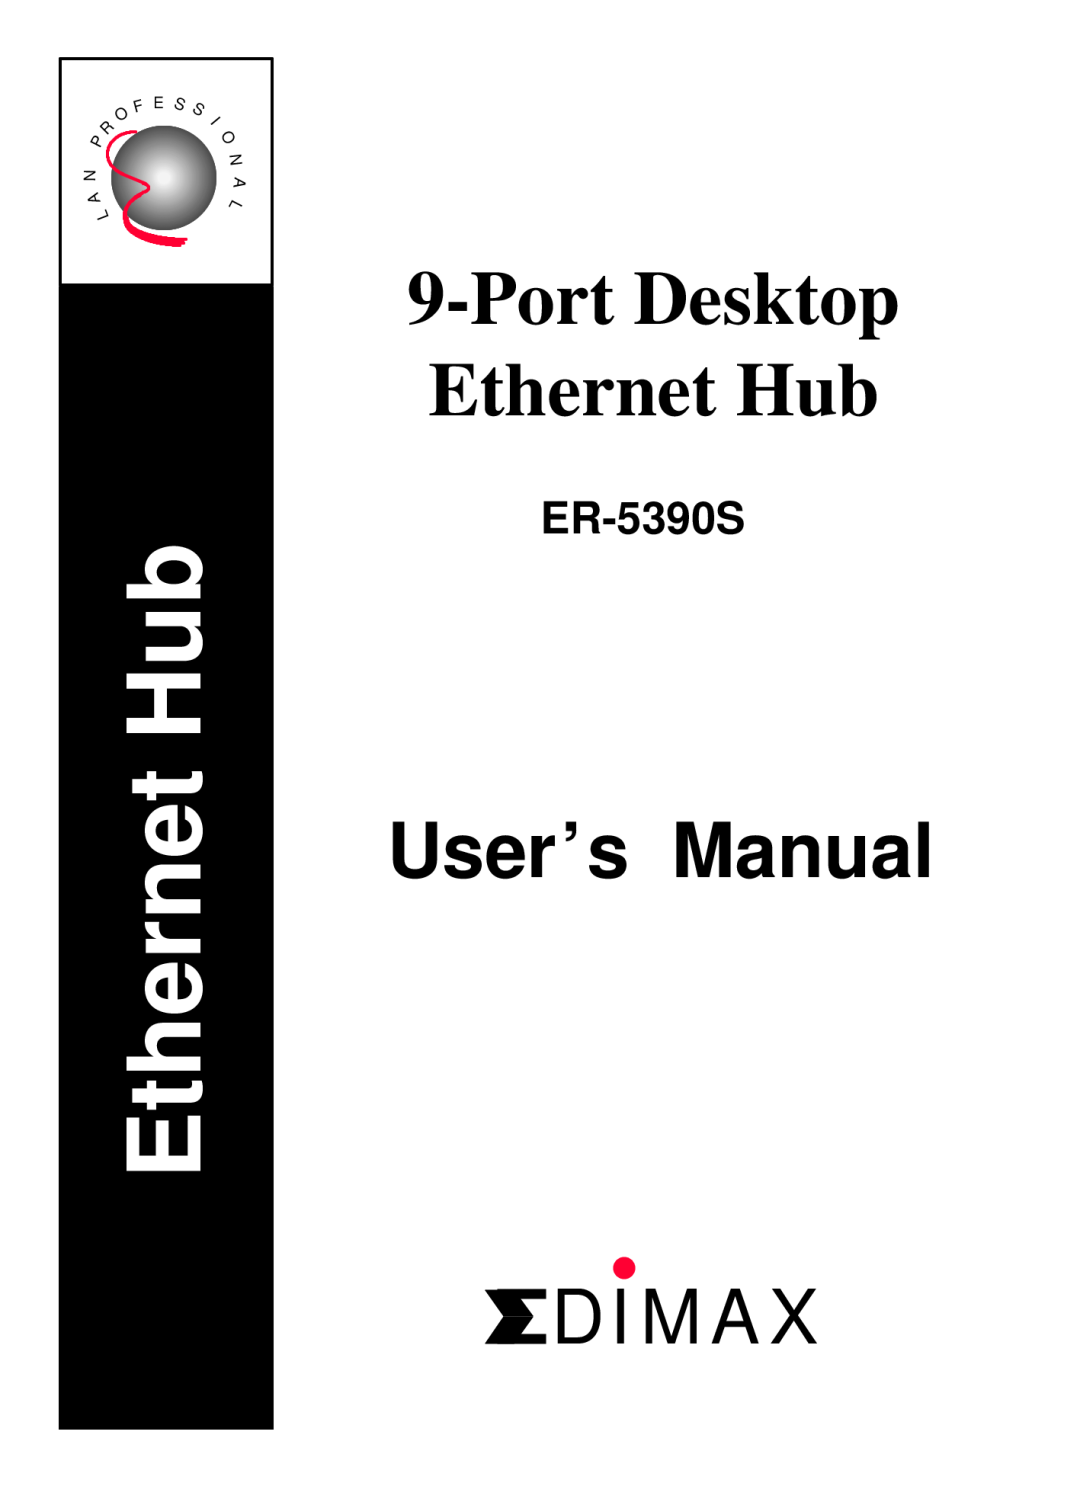 Edimax Technology ER-5390S user manual Port Desktop Ethernet Hub, User’s Manual, Dimax, F E S 